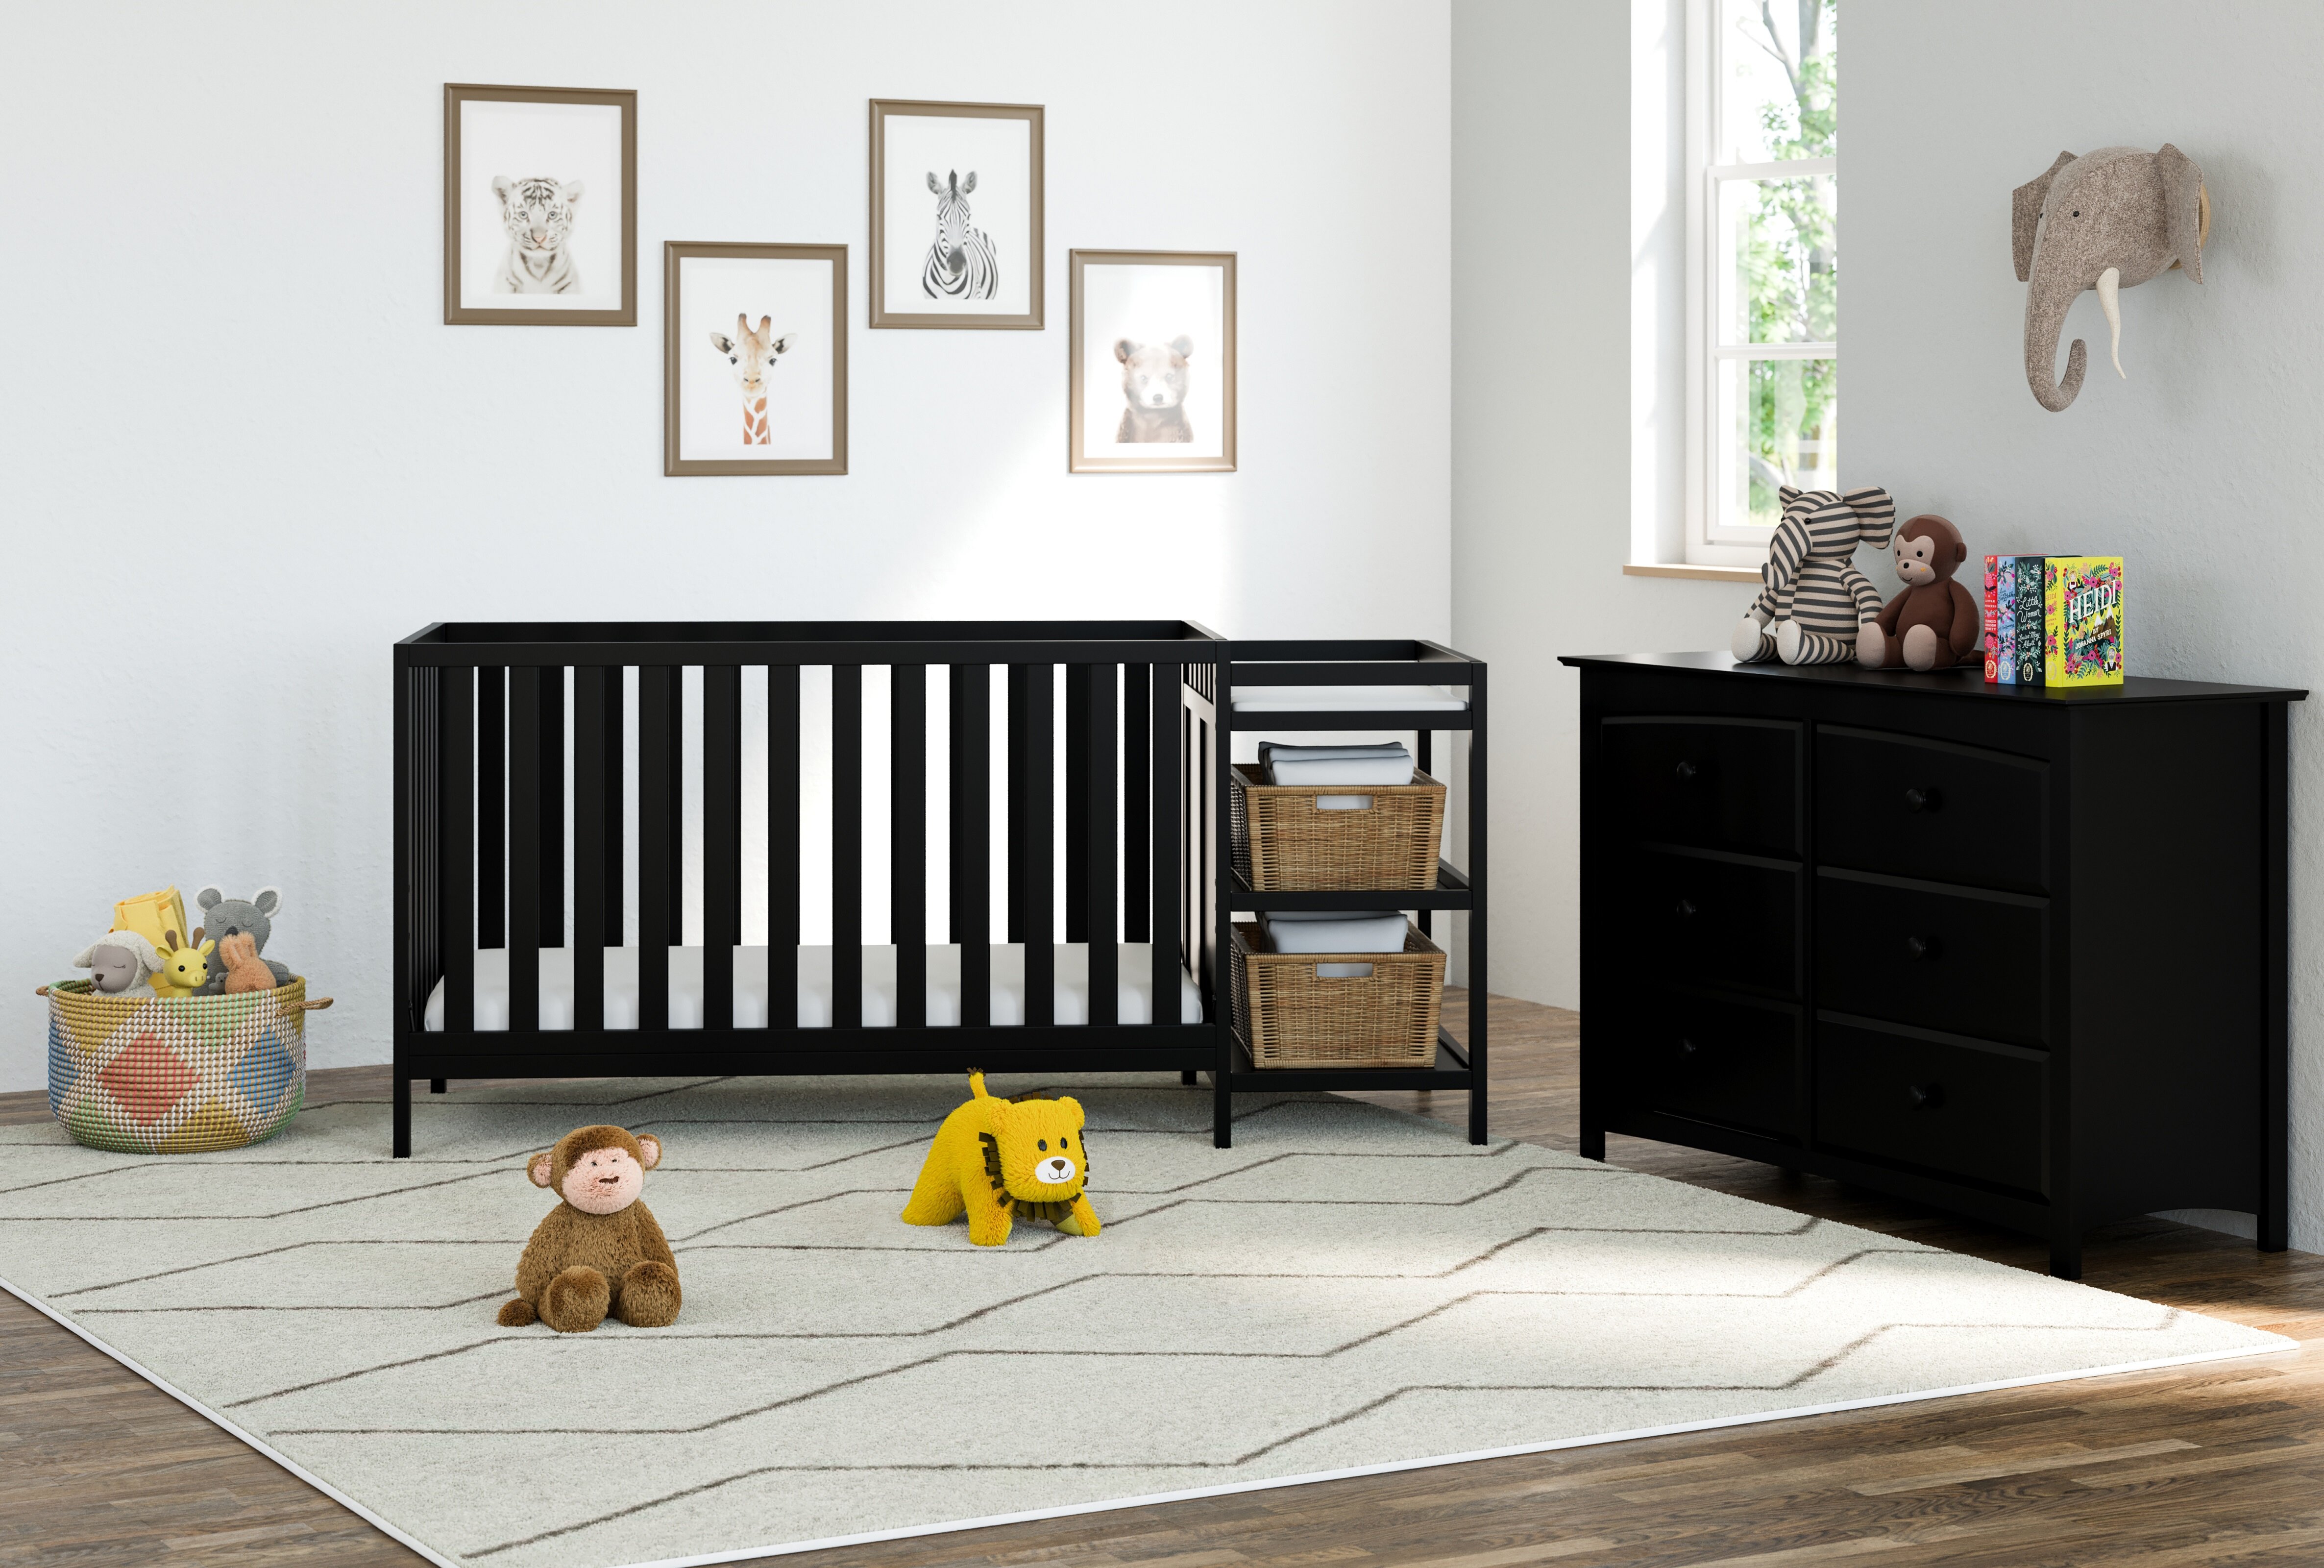 nursery with black furniture